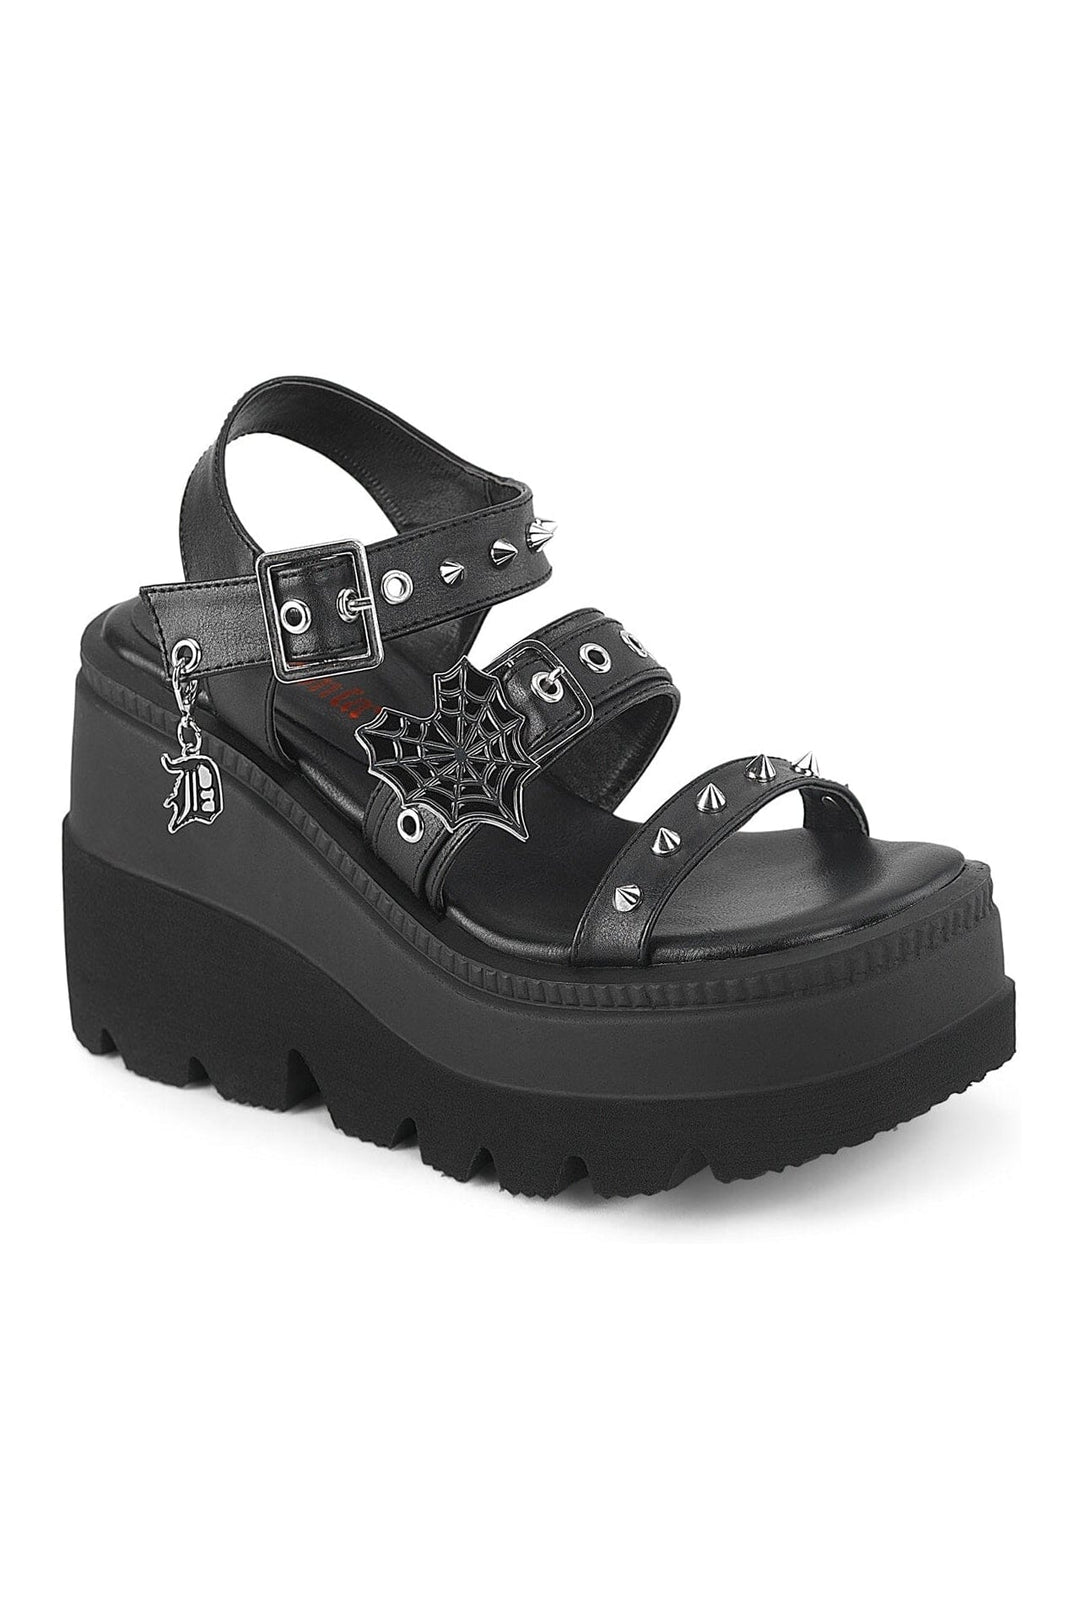 SHAKER-13 Black Vegan Leather Sandal-Sandals-Demonia-Black-10-Vegan Leather-SEXYSHOES.COM